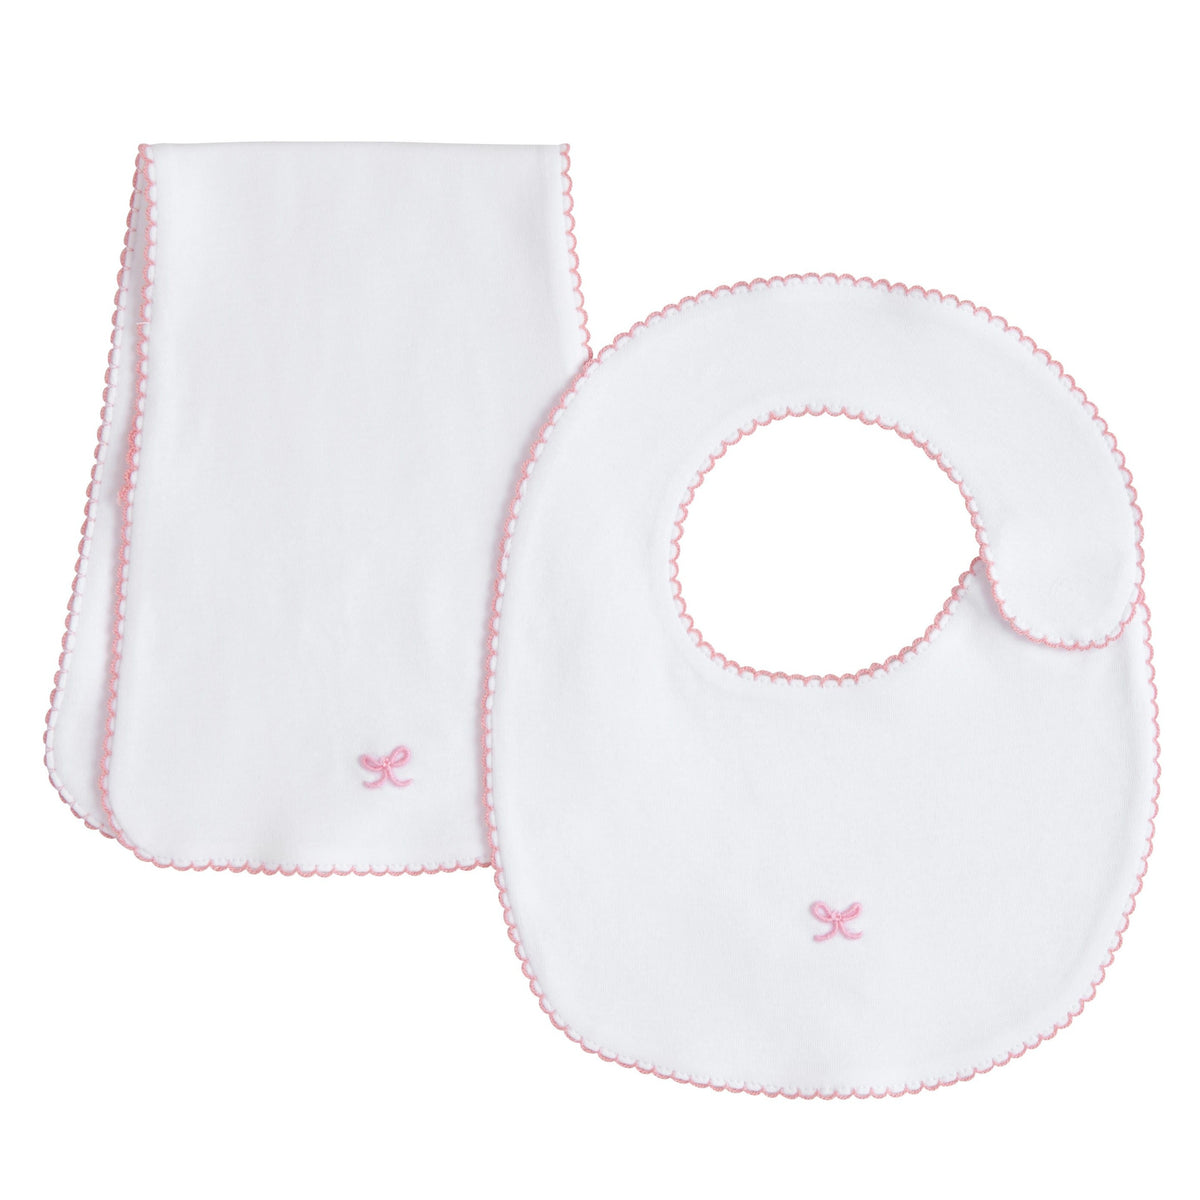 seguridadindustrialcr traditional baby gift, pink bow bib